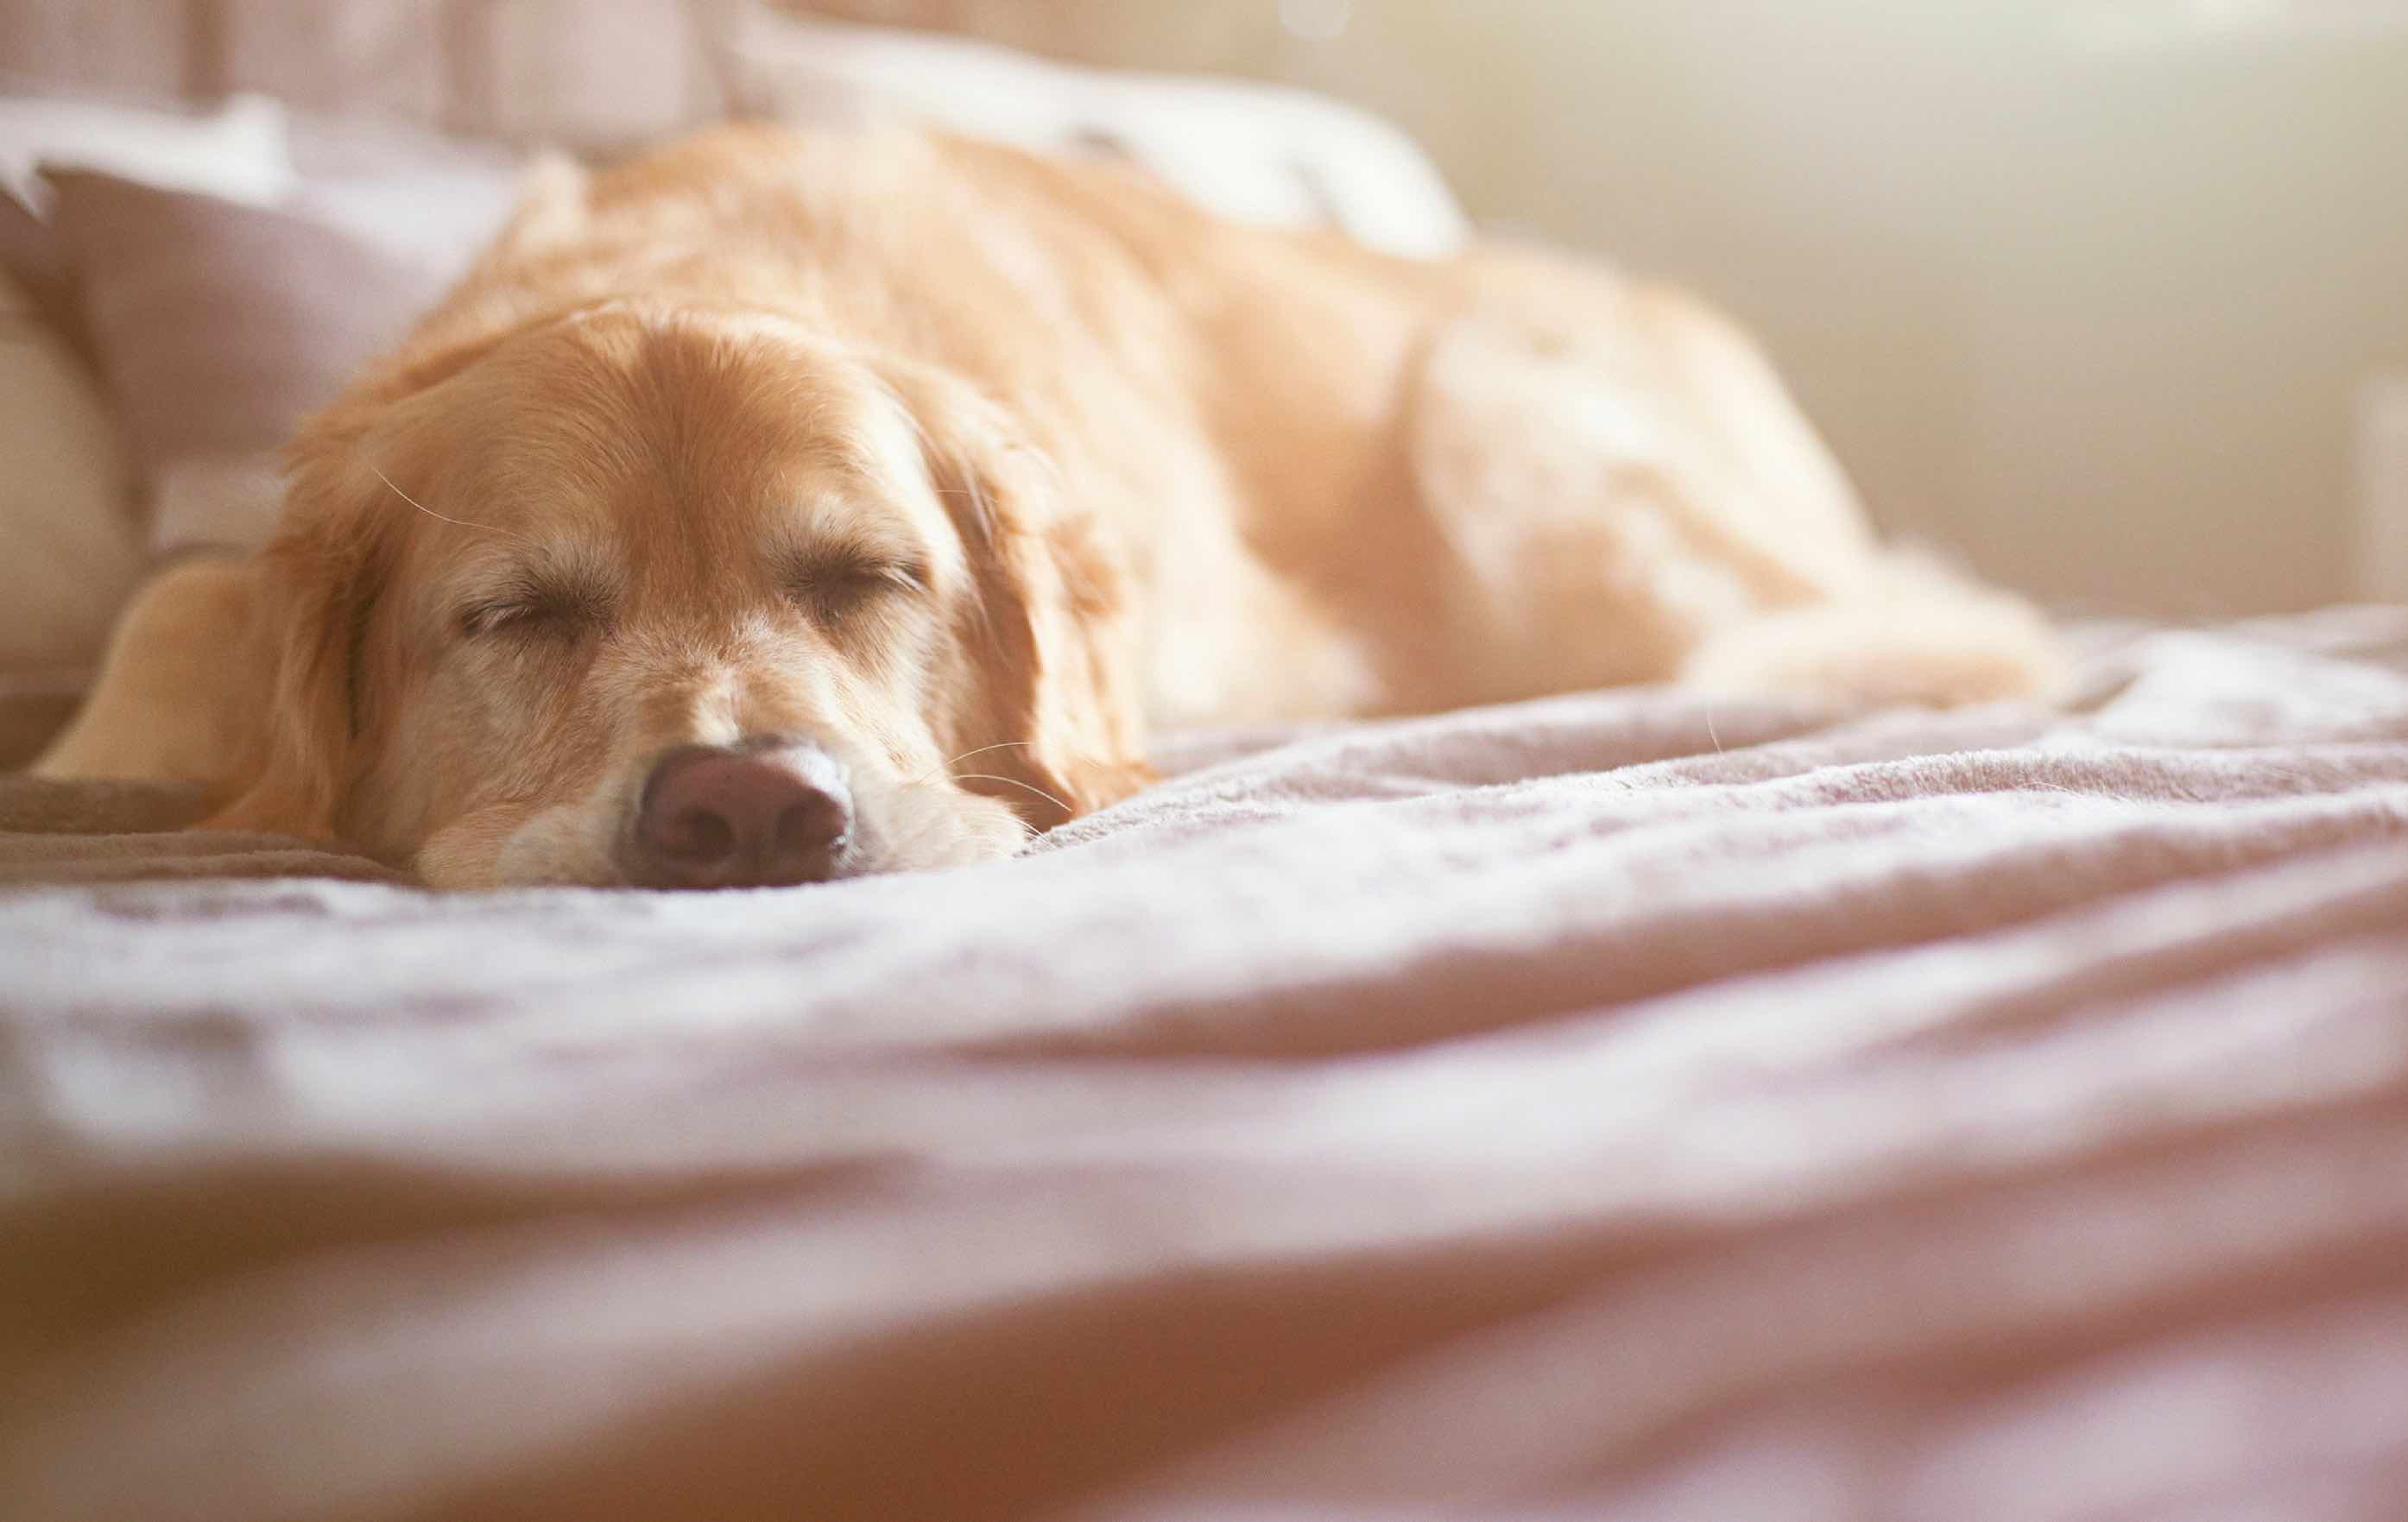 A sleeping dog lying on a bed